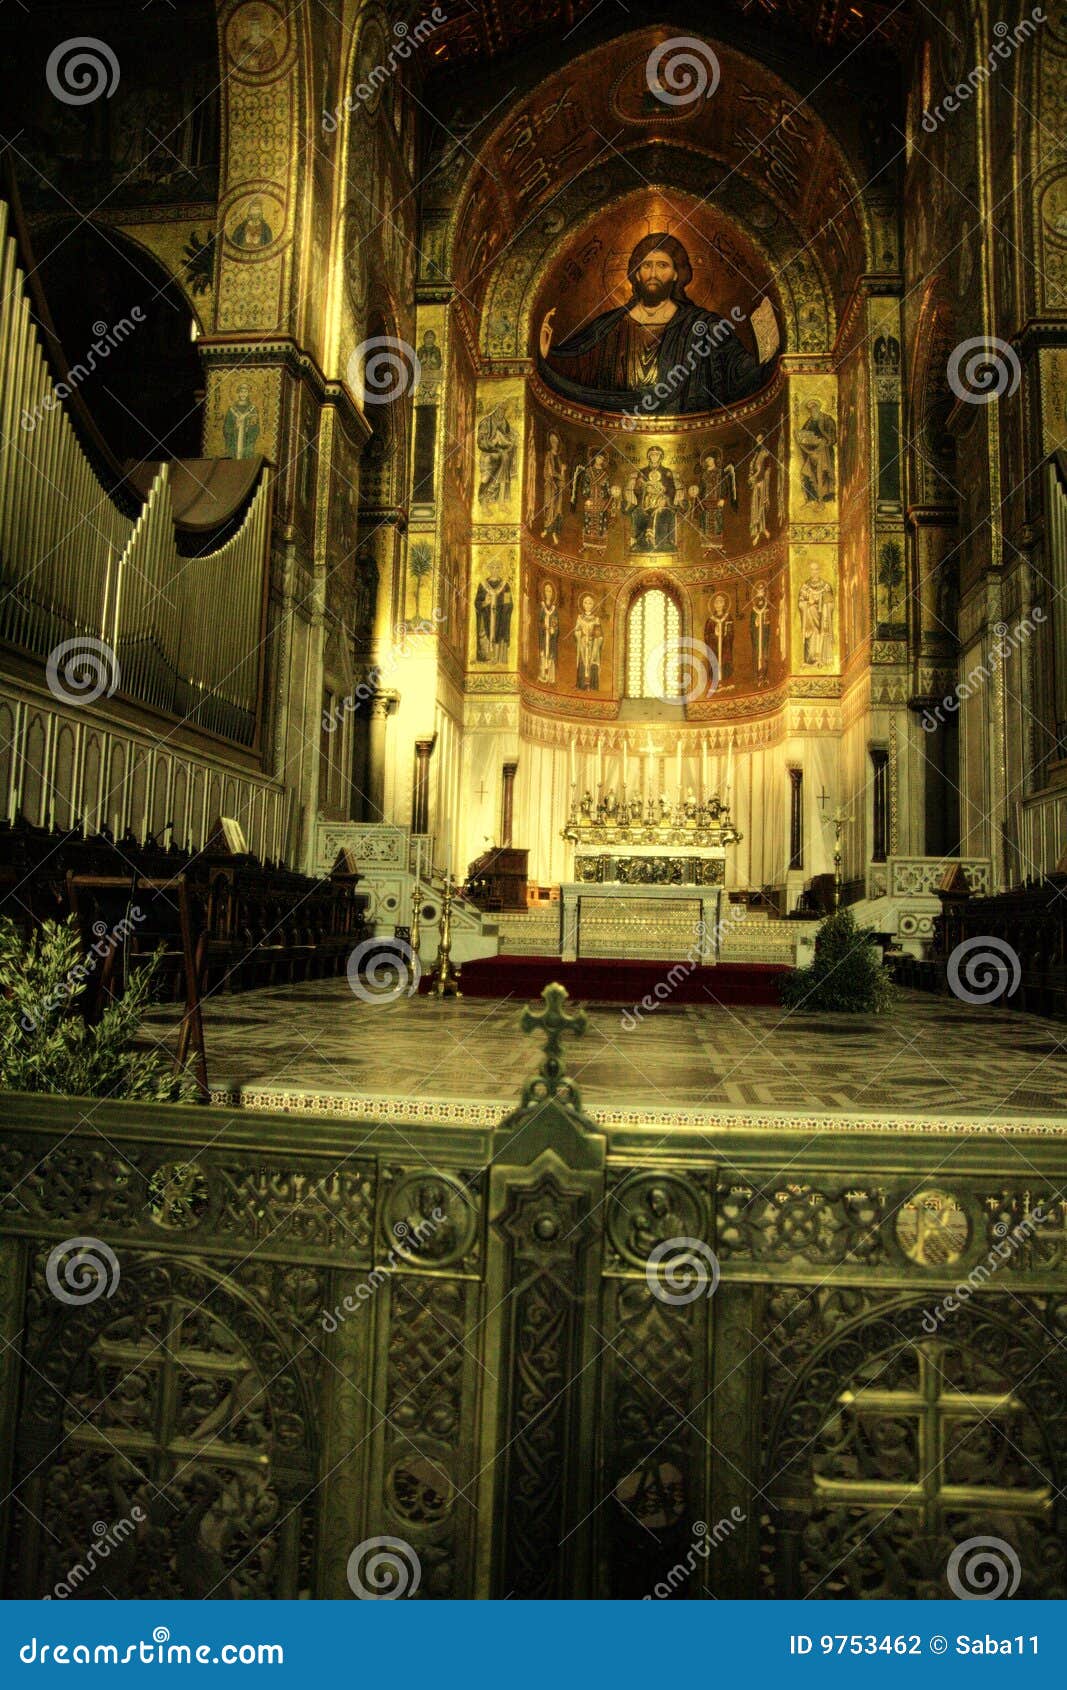 monreale cathedral altar & golden mosaics, sicily